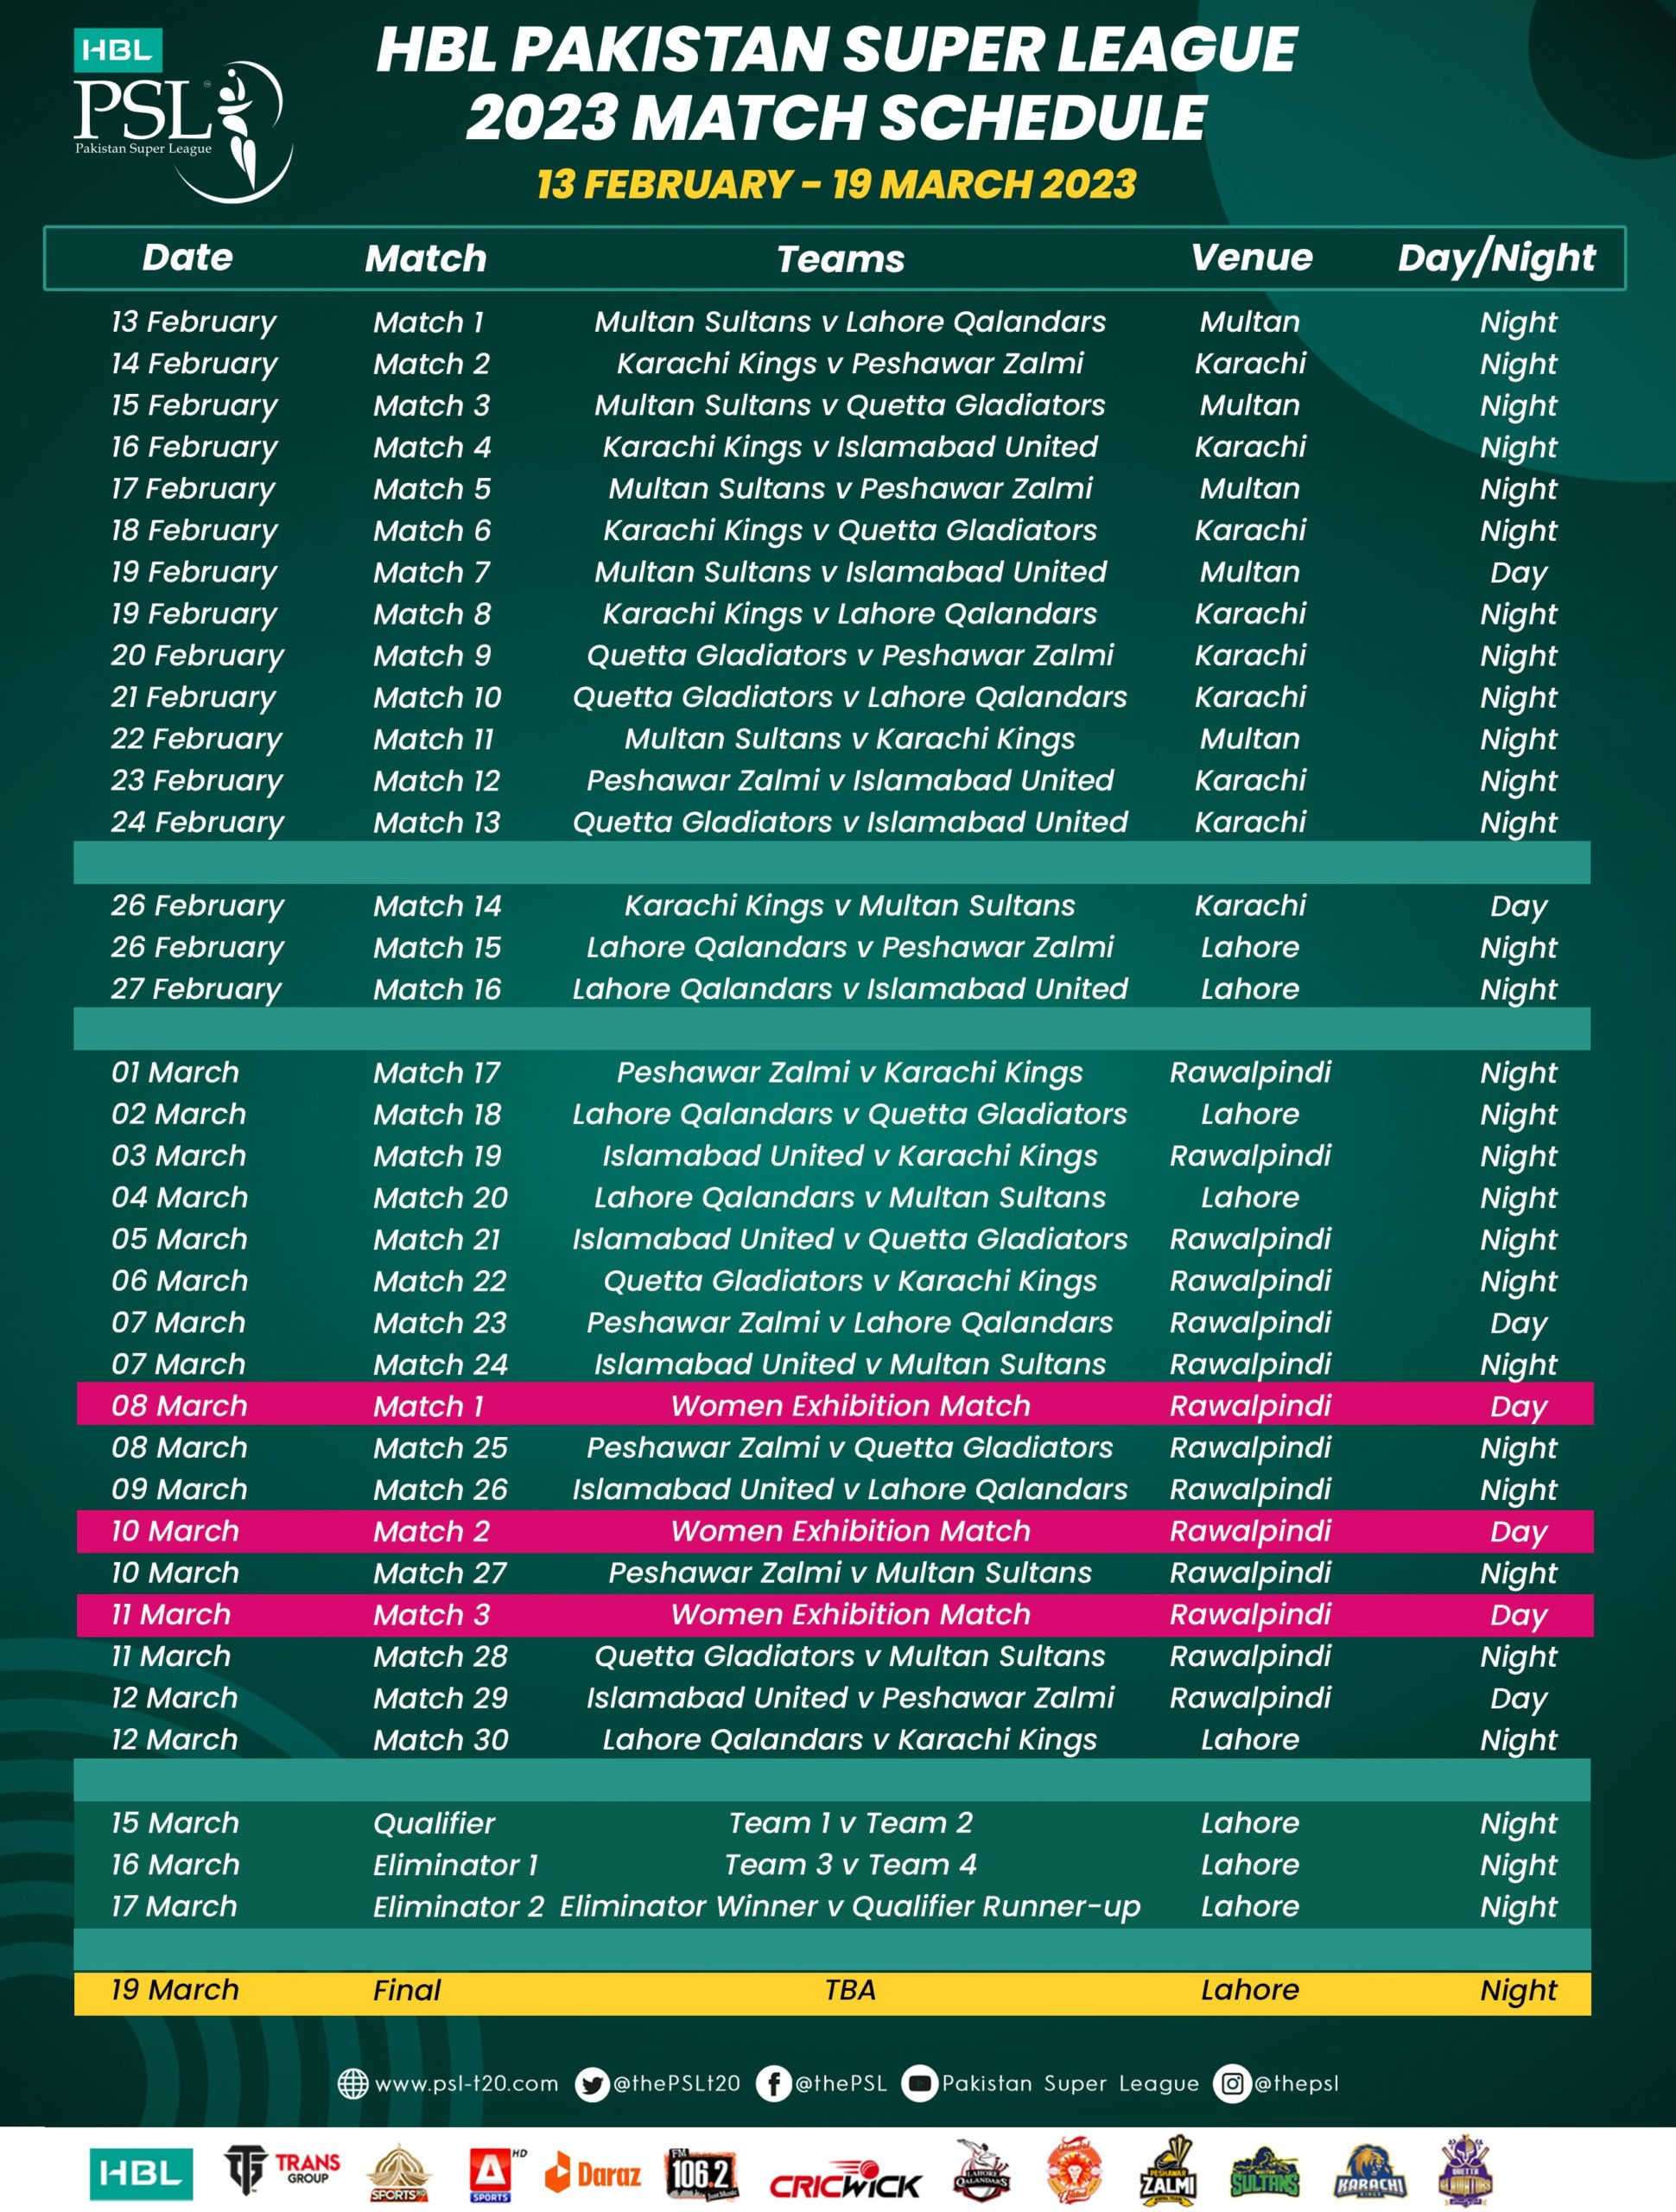 PSL8 matches schedule